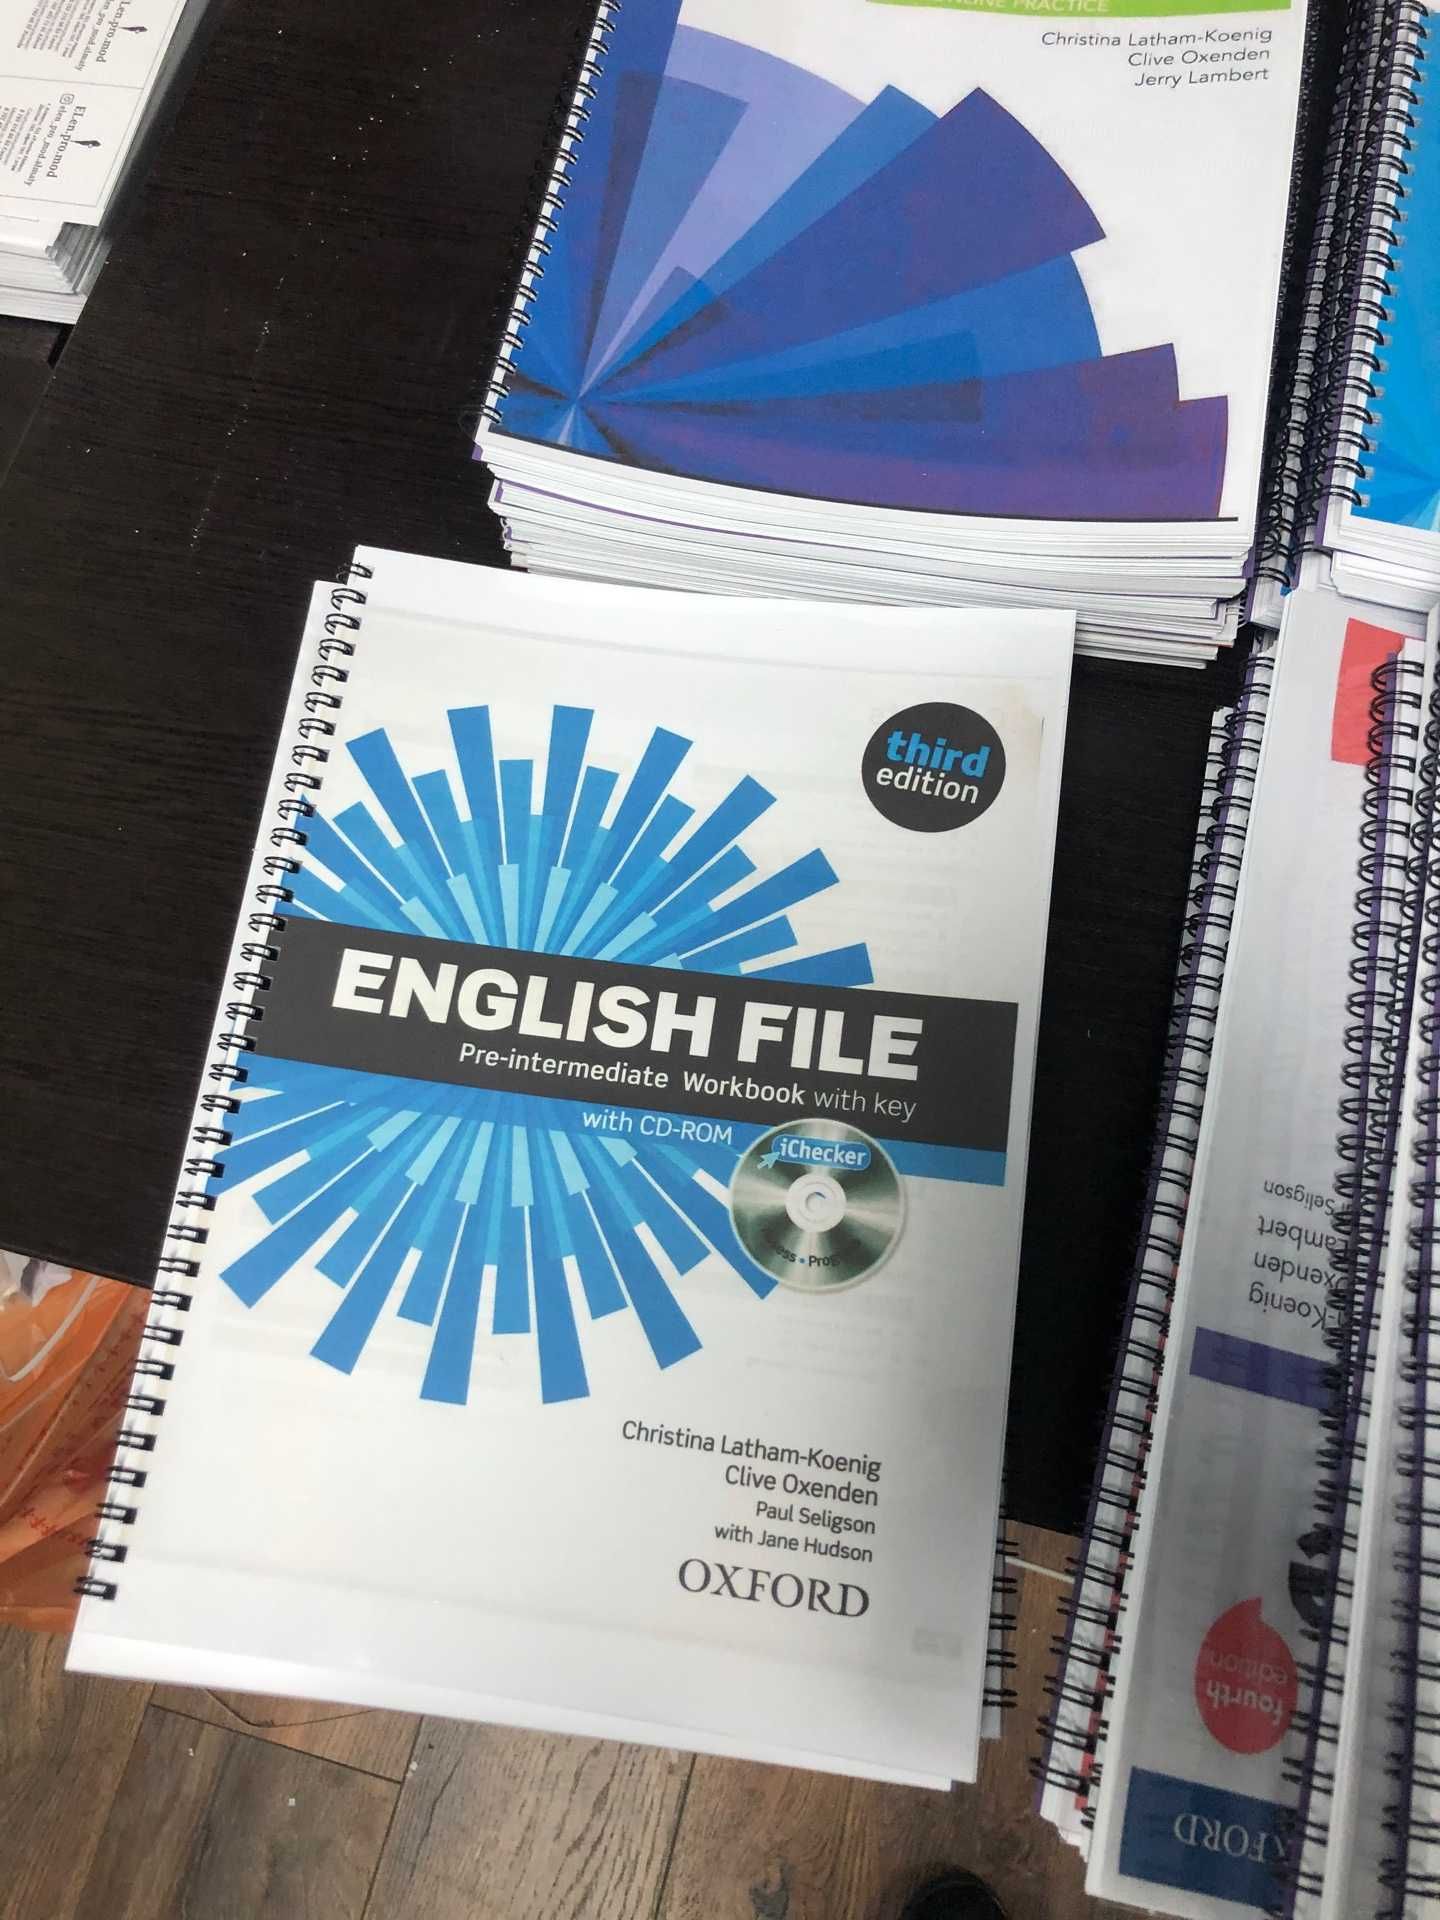 English File 3rd edition